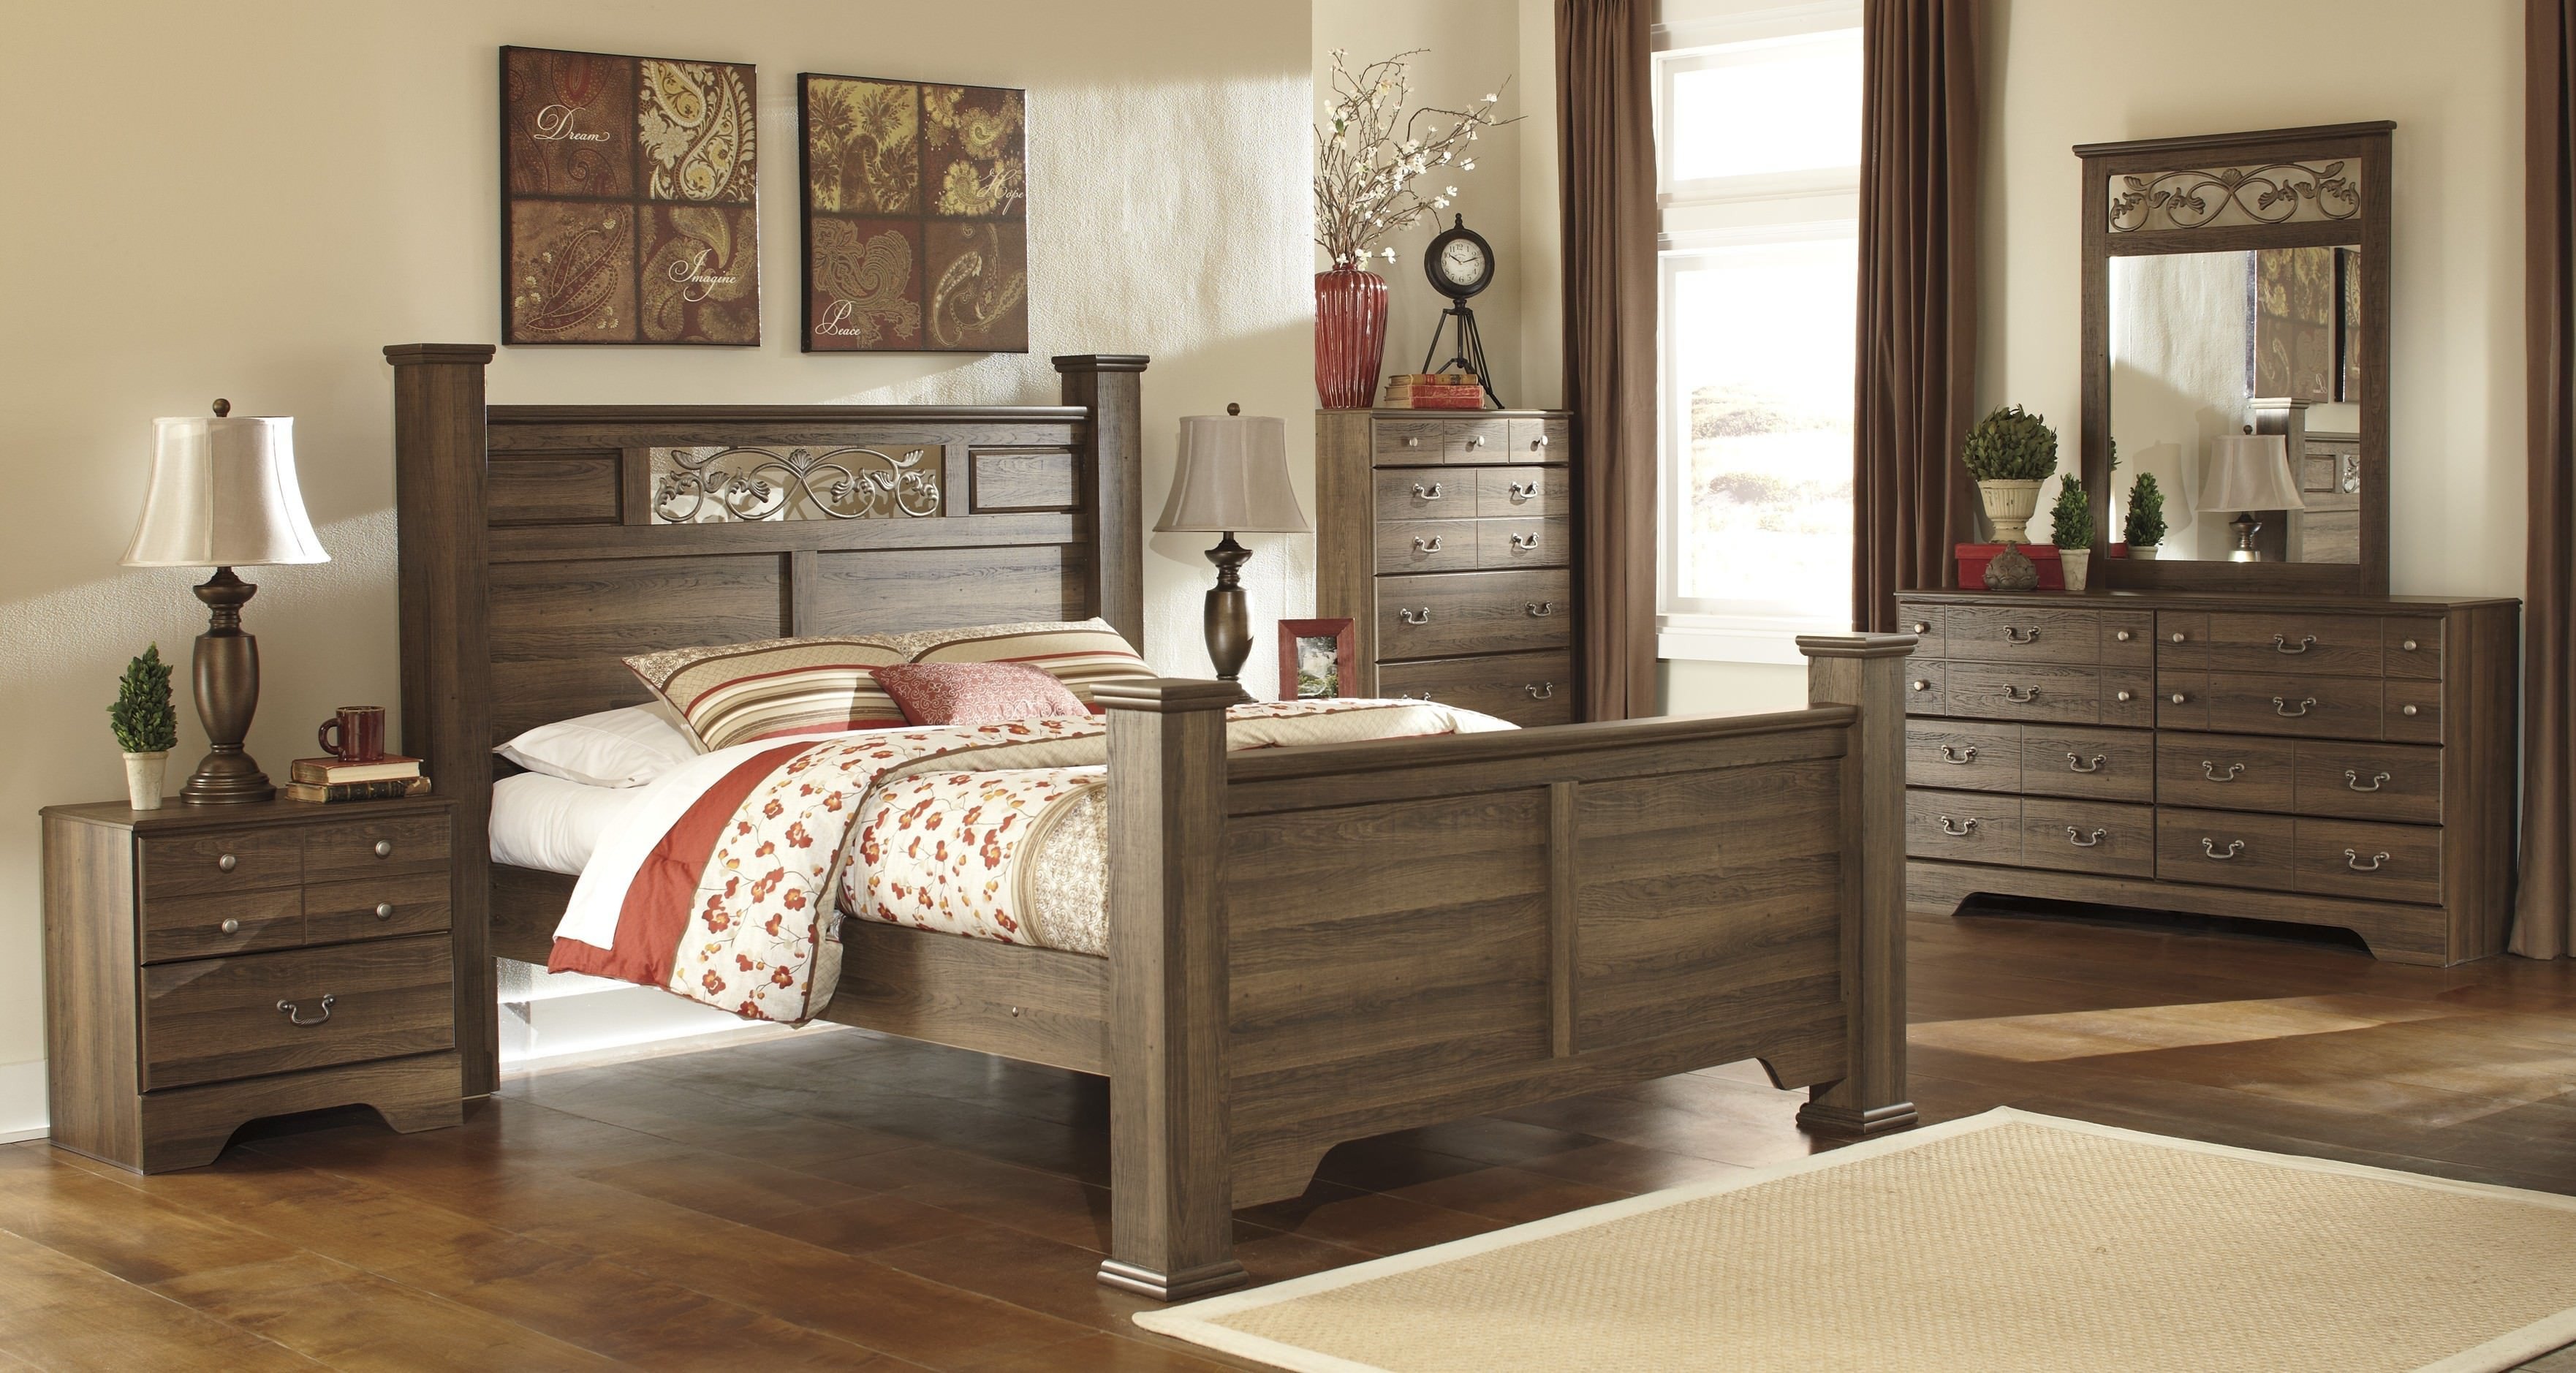 bobs wood bedroom furniture